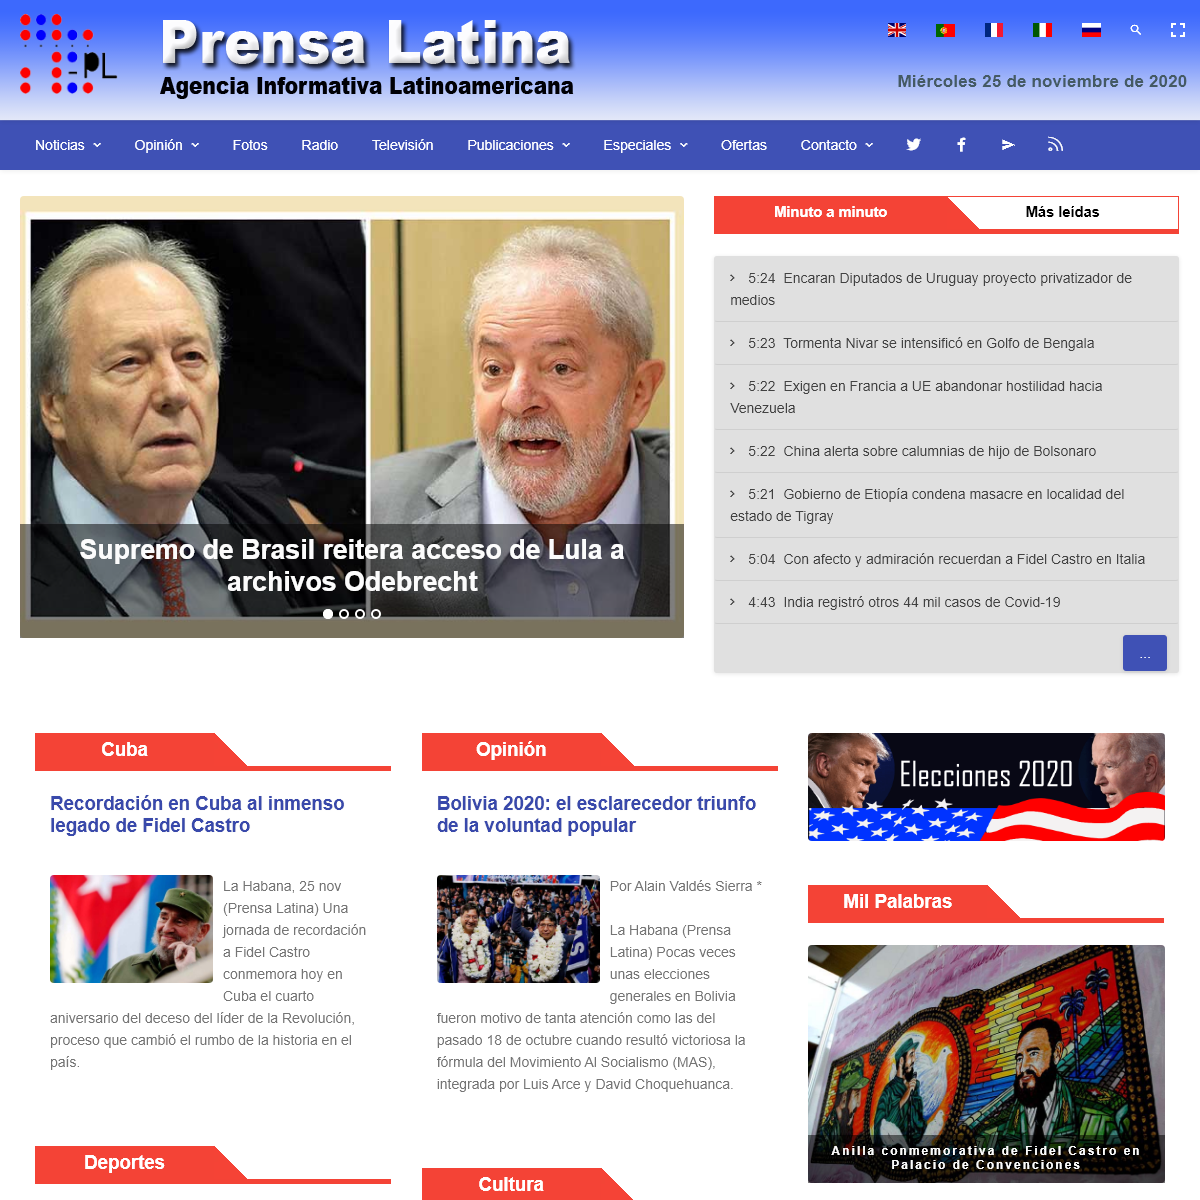 A complete backup of prensa-latina.cu